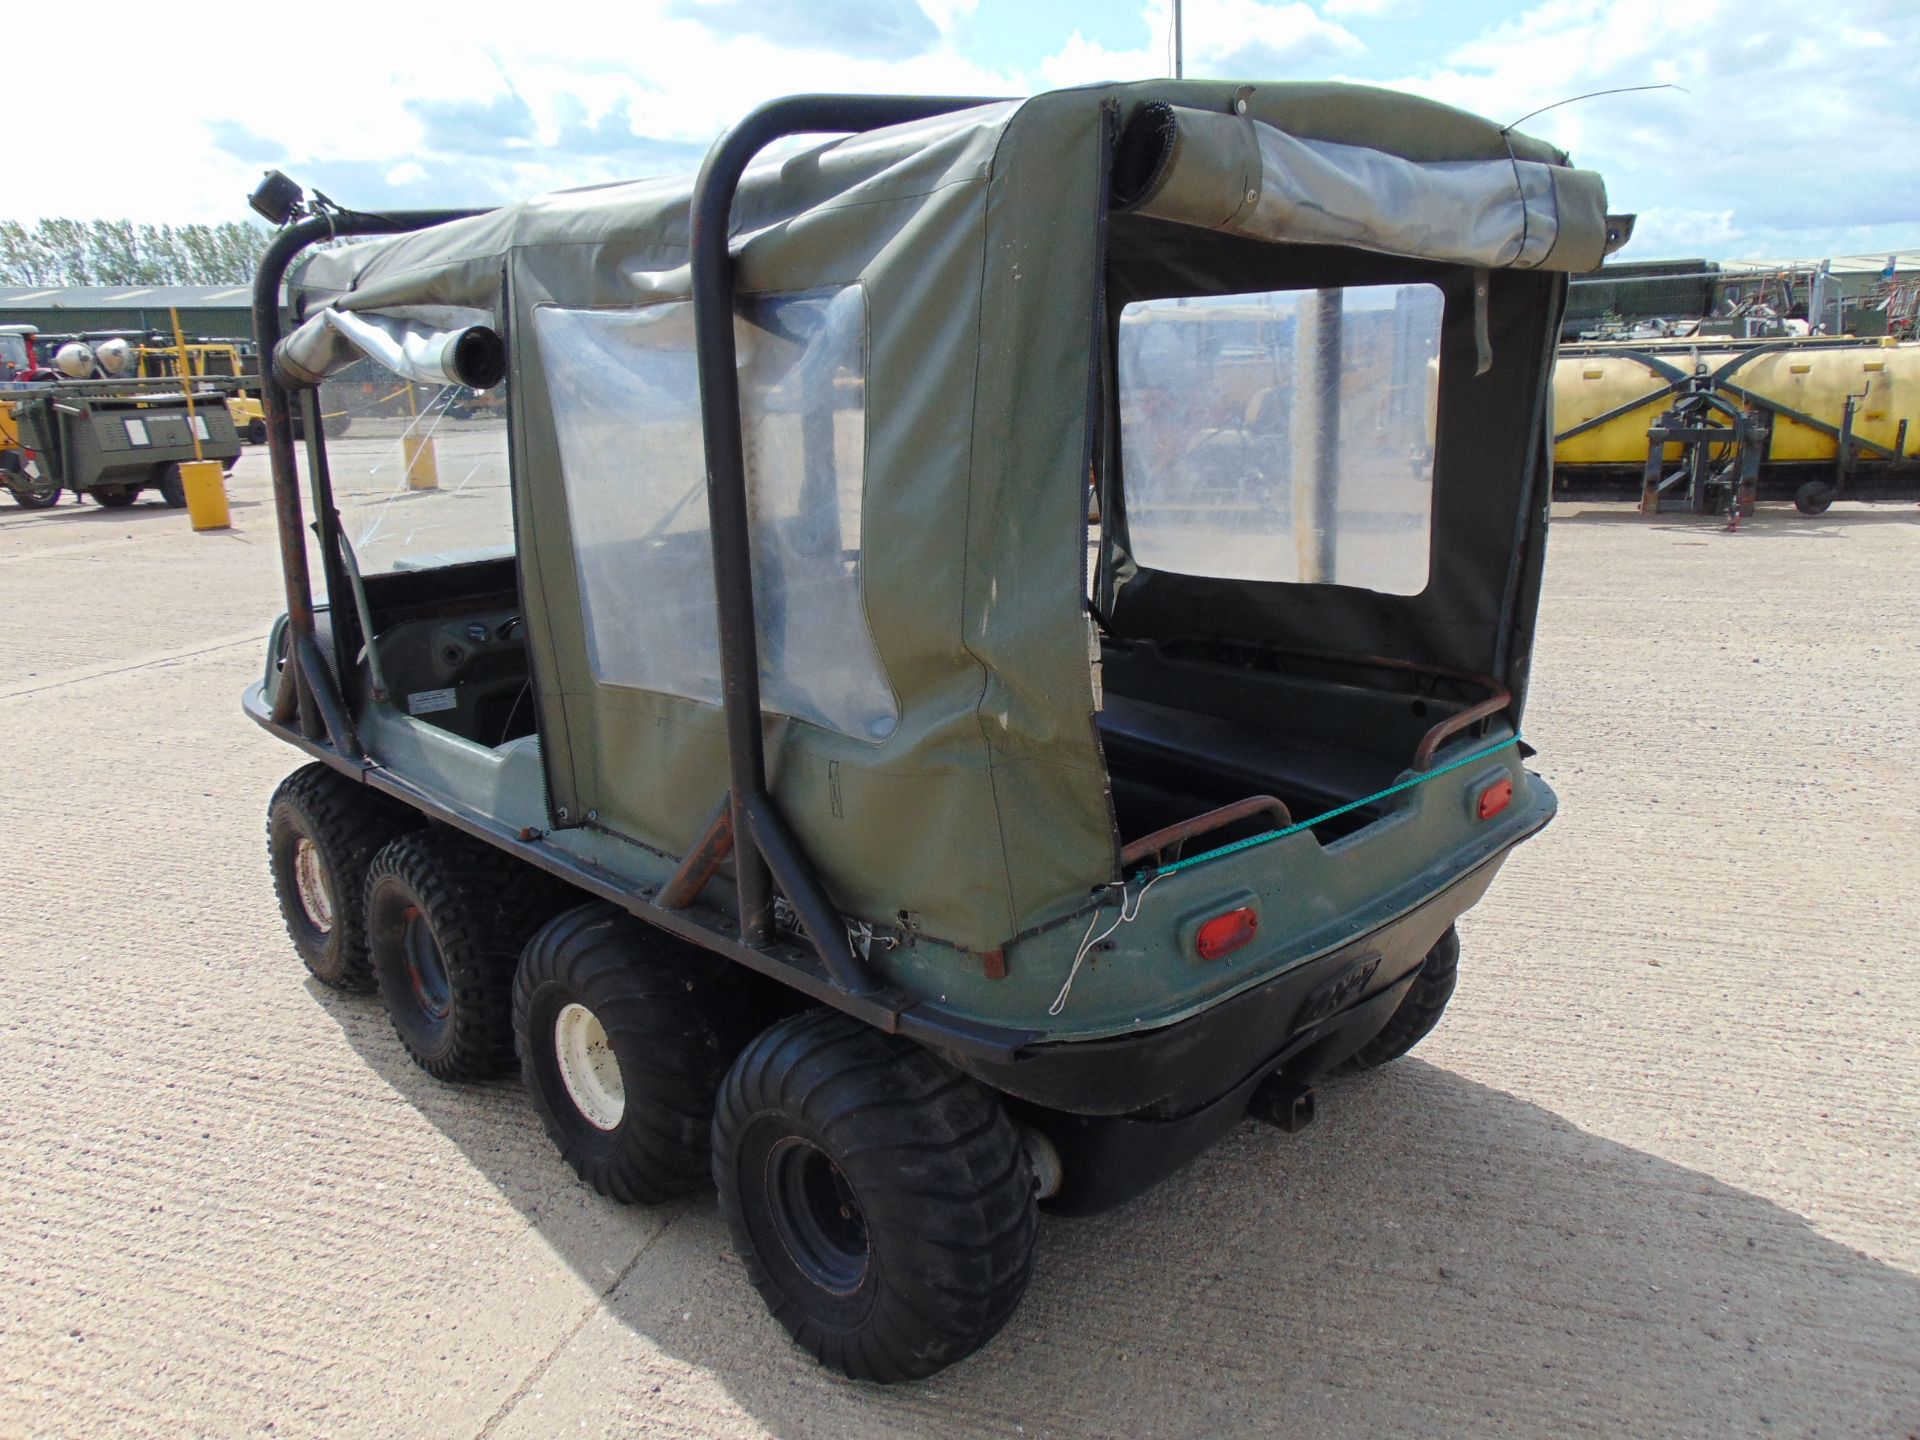 Argocat 8x8 Conquest Amphibious ATV with Canopy - Image 8 of 19